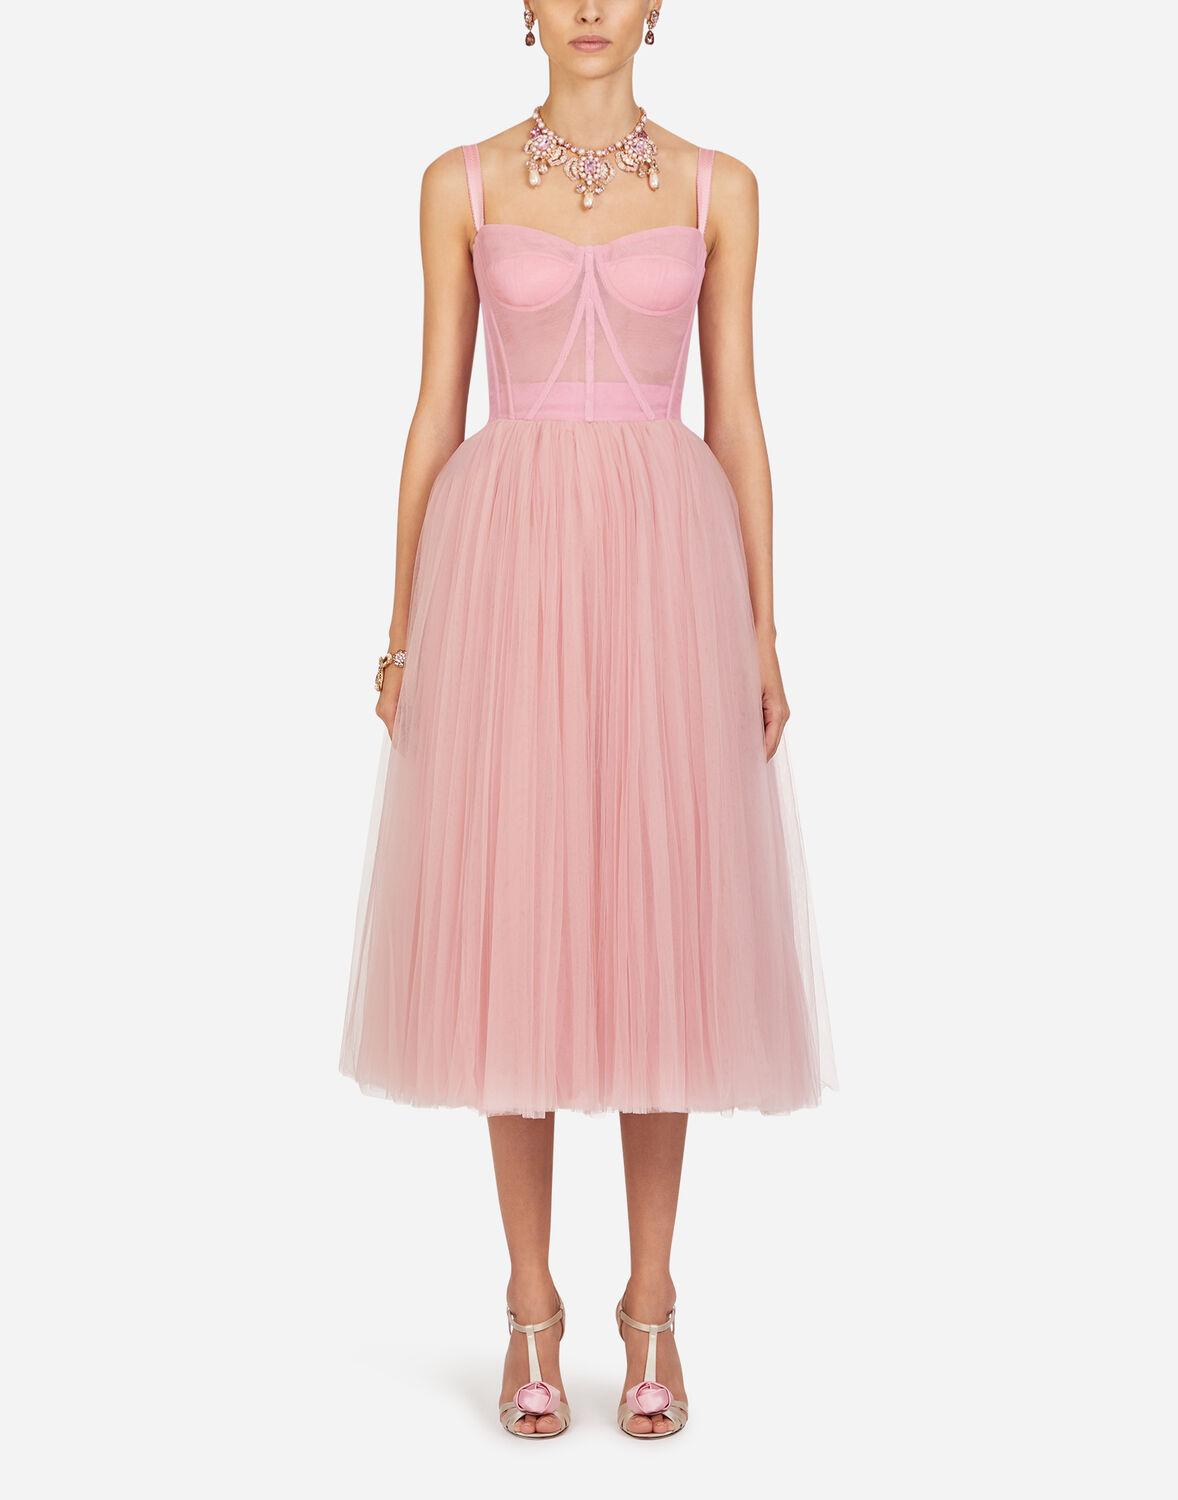 Dolce & Gabbana Tulle Midi Dress in Pink - Lyst